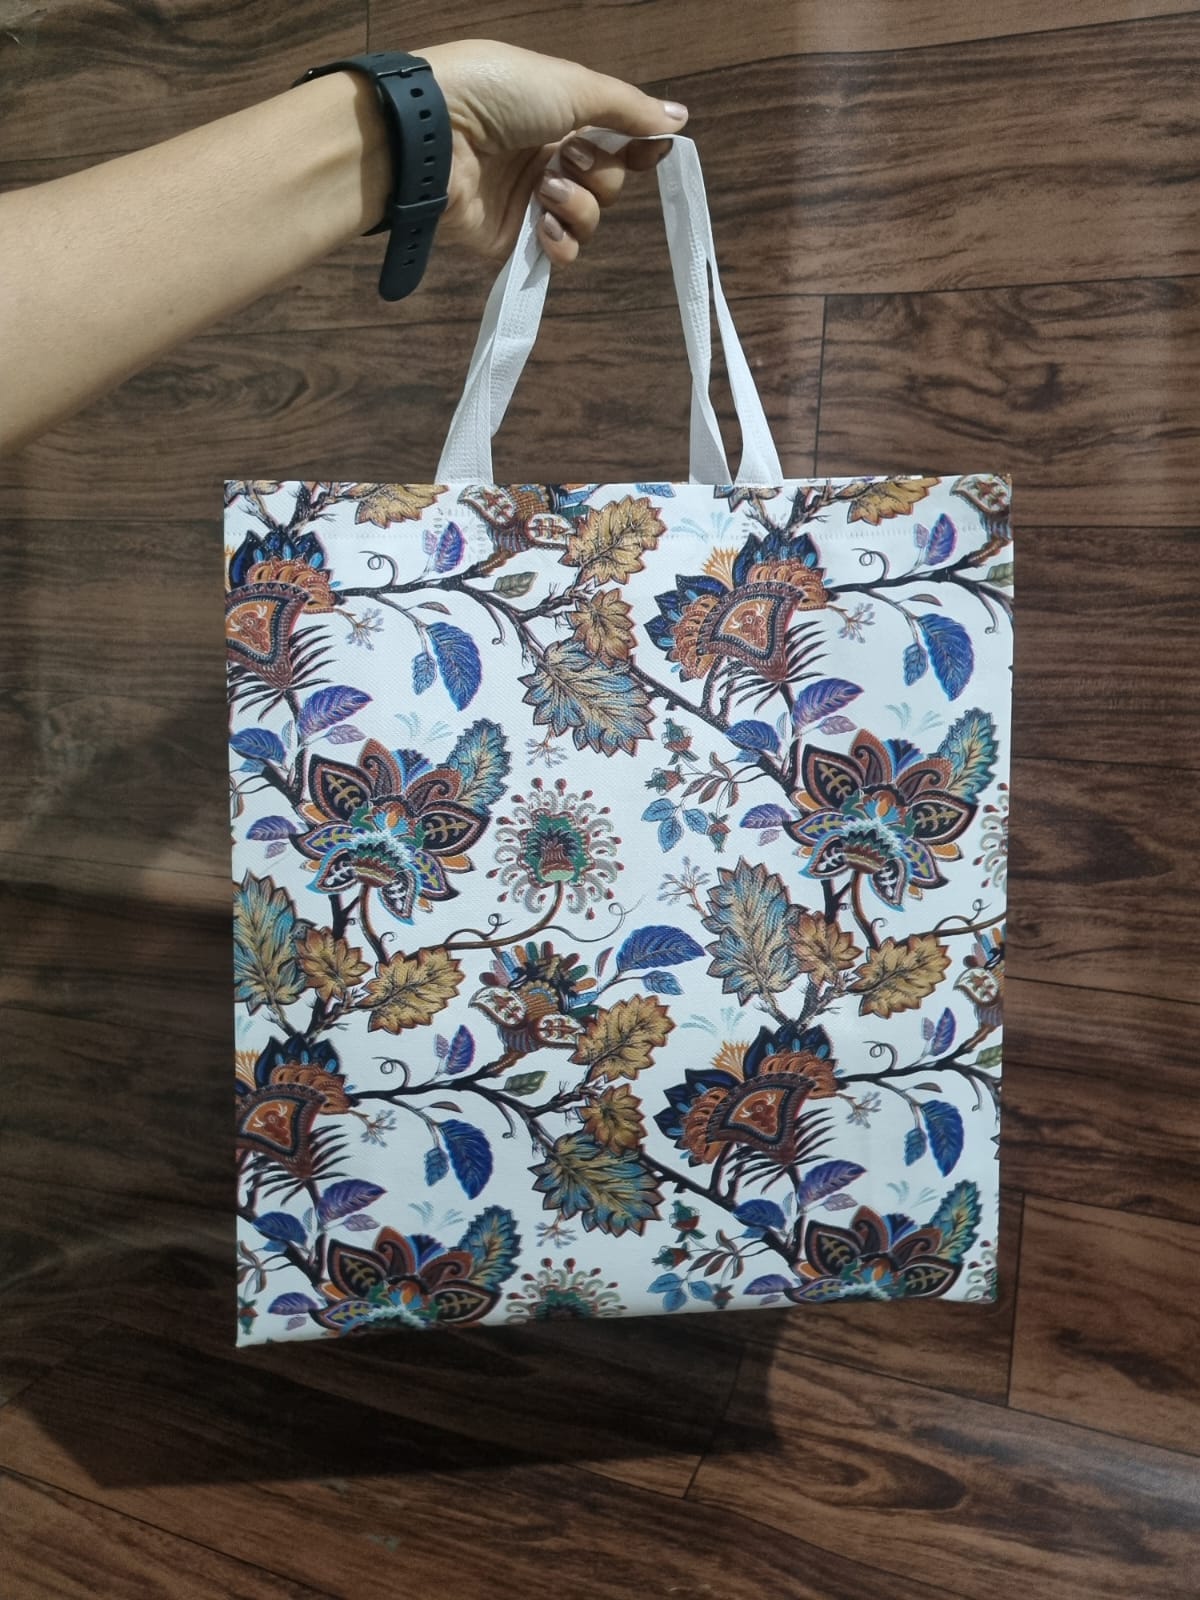 Mumbai market Gift Boxes & Paper Bags loop-m1 (P2) Medium Loop Handle Printed Shopping Bags size-36x33x12cm